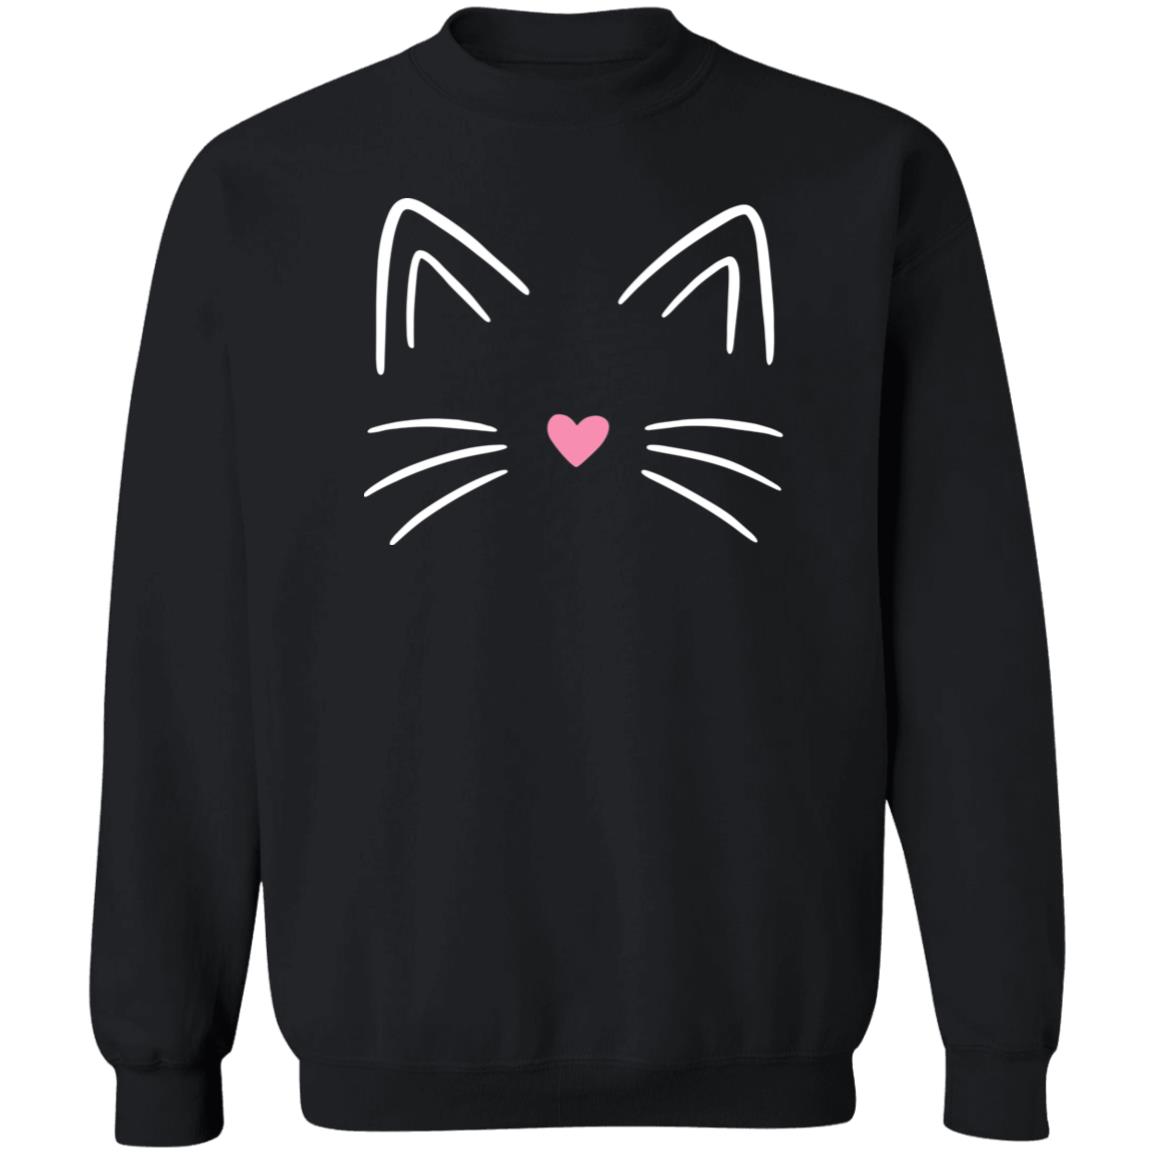 Kitty Face Sweatshirt Black - iHeartCats.com